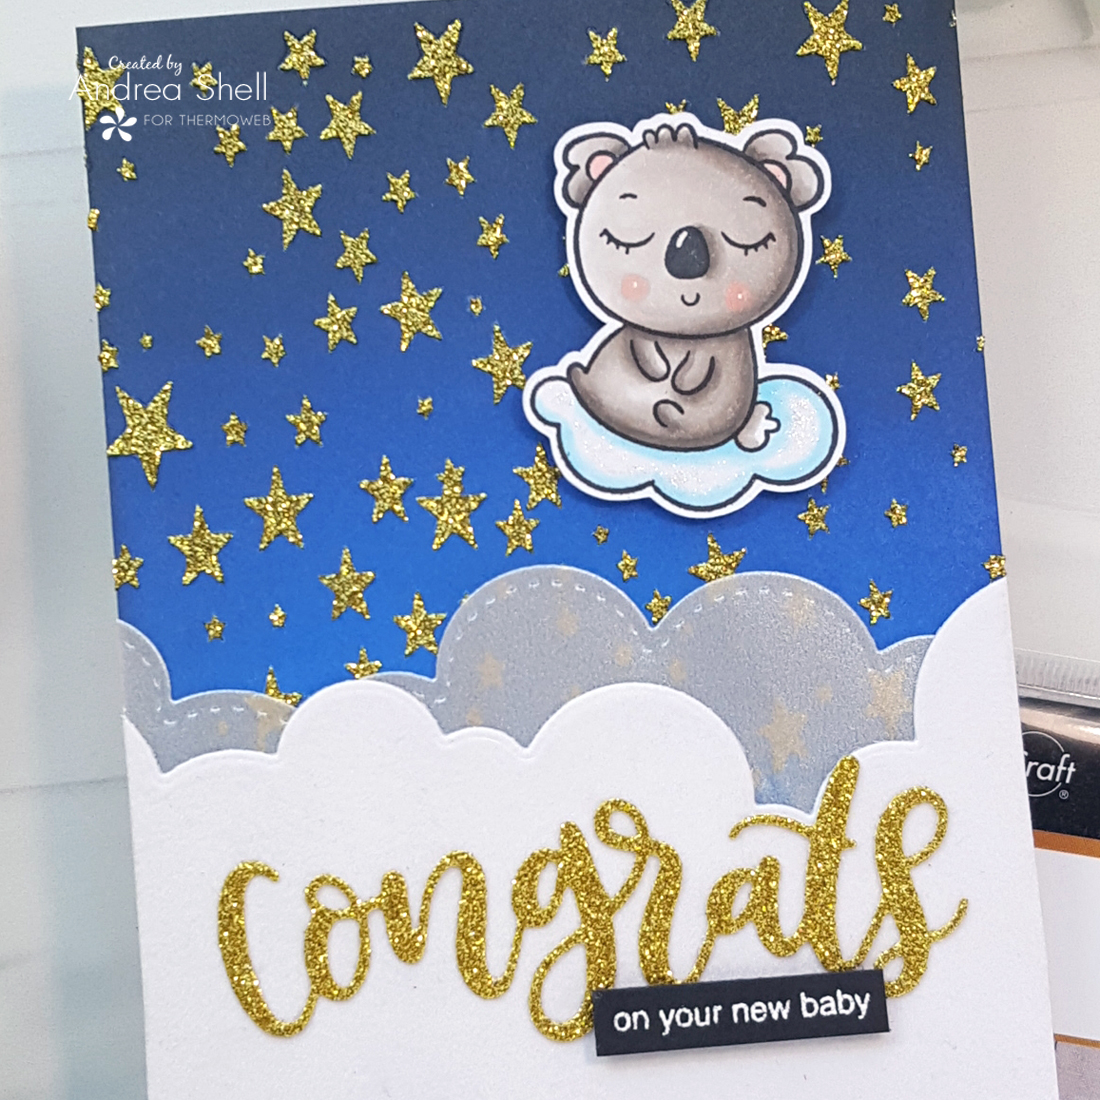 Congrats Baby Koala Card by Andrea Shell | Koala Cuteness stamp by Whimsy Stamps